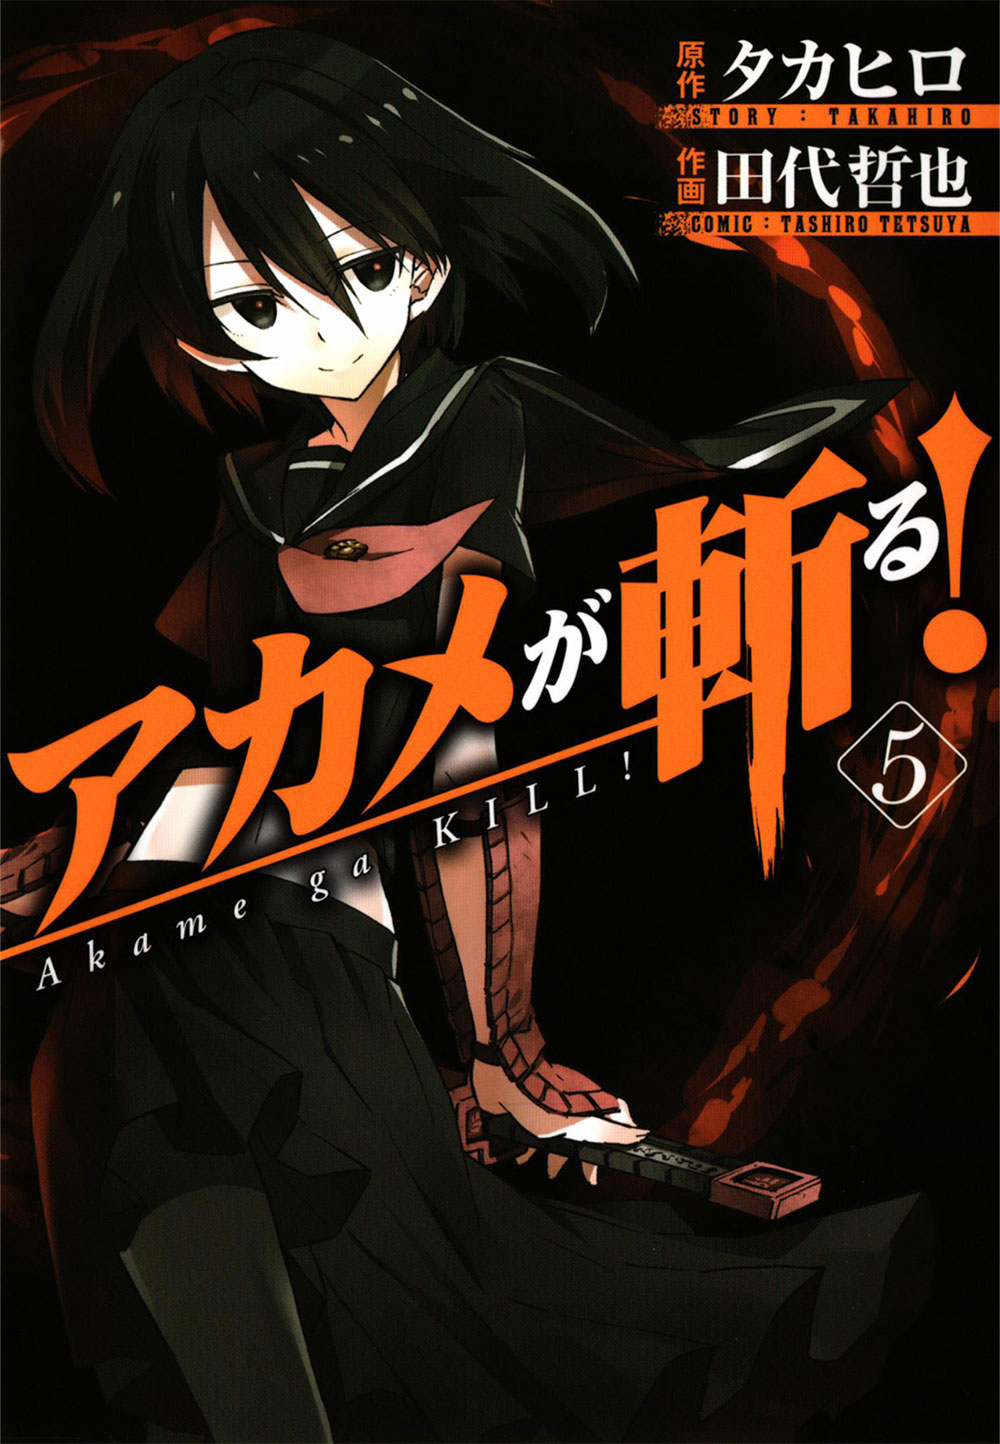 Akame-ga-KILL!-Anime-Airing-2014-Cover-5